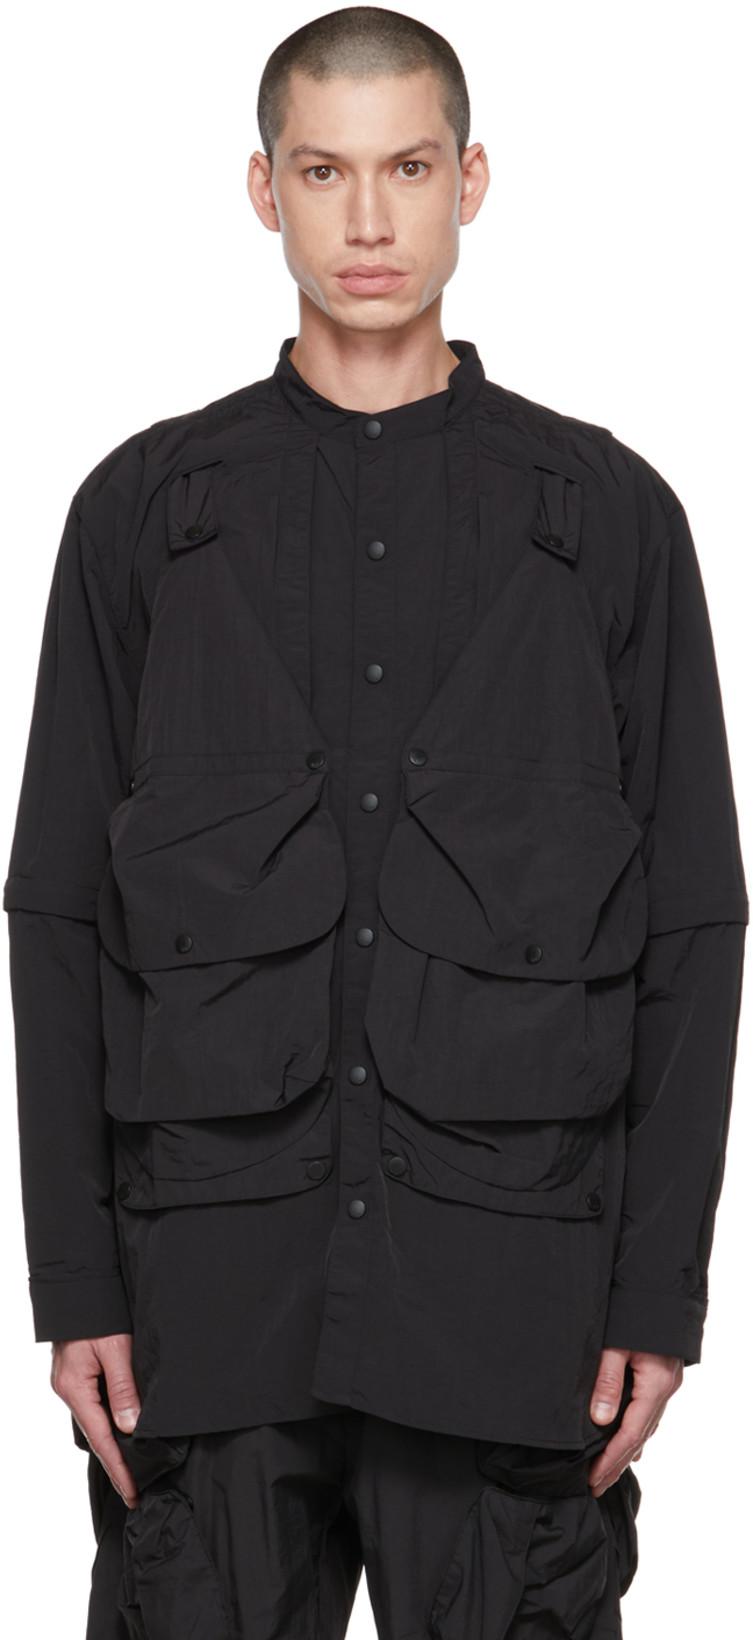 Black 'Vest Shirt' 1.0 Jacket by ARCHIVAL REINVENT